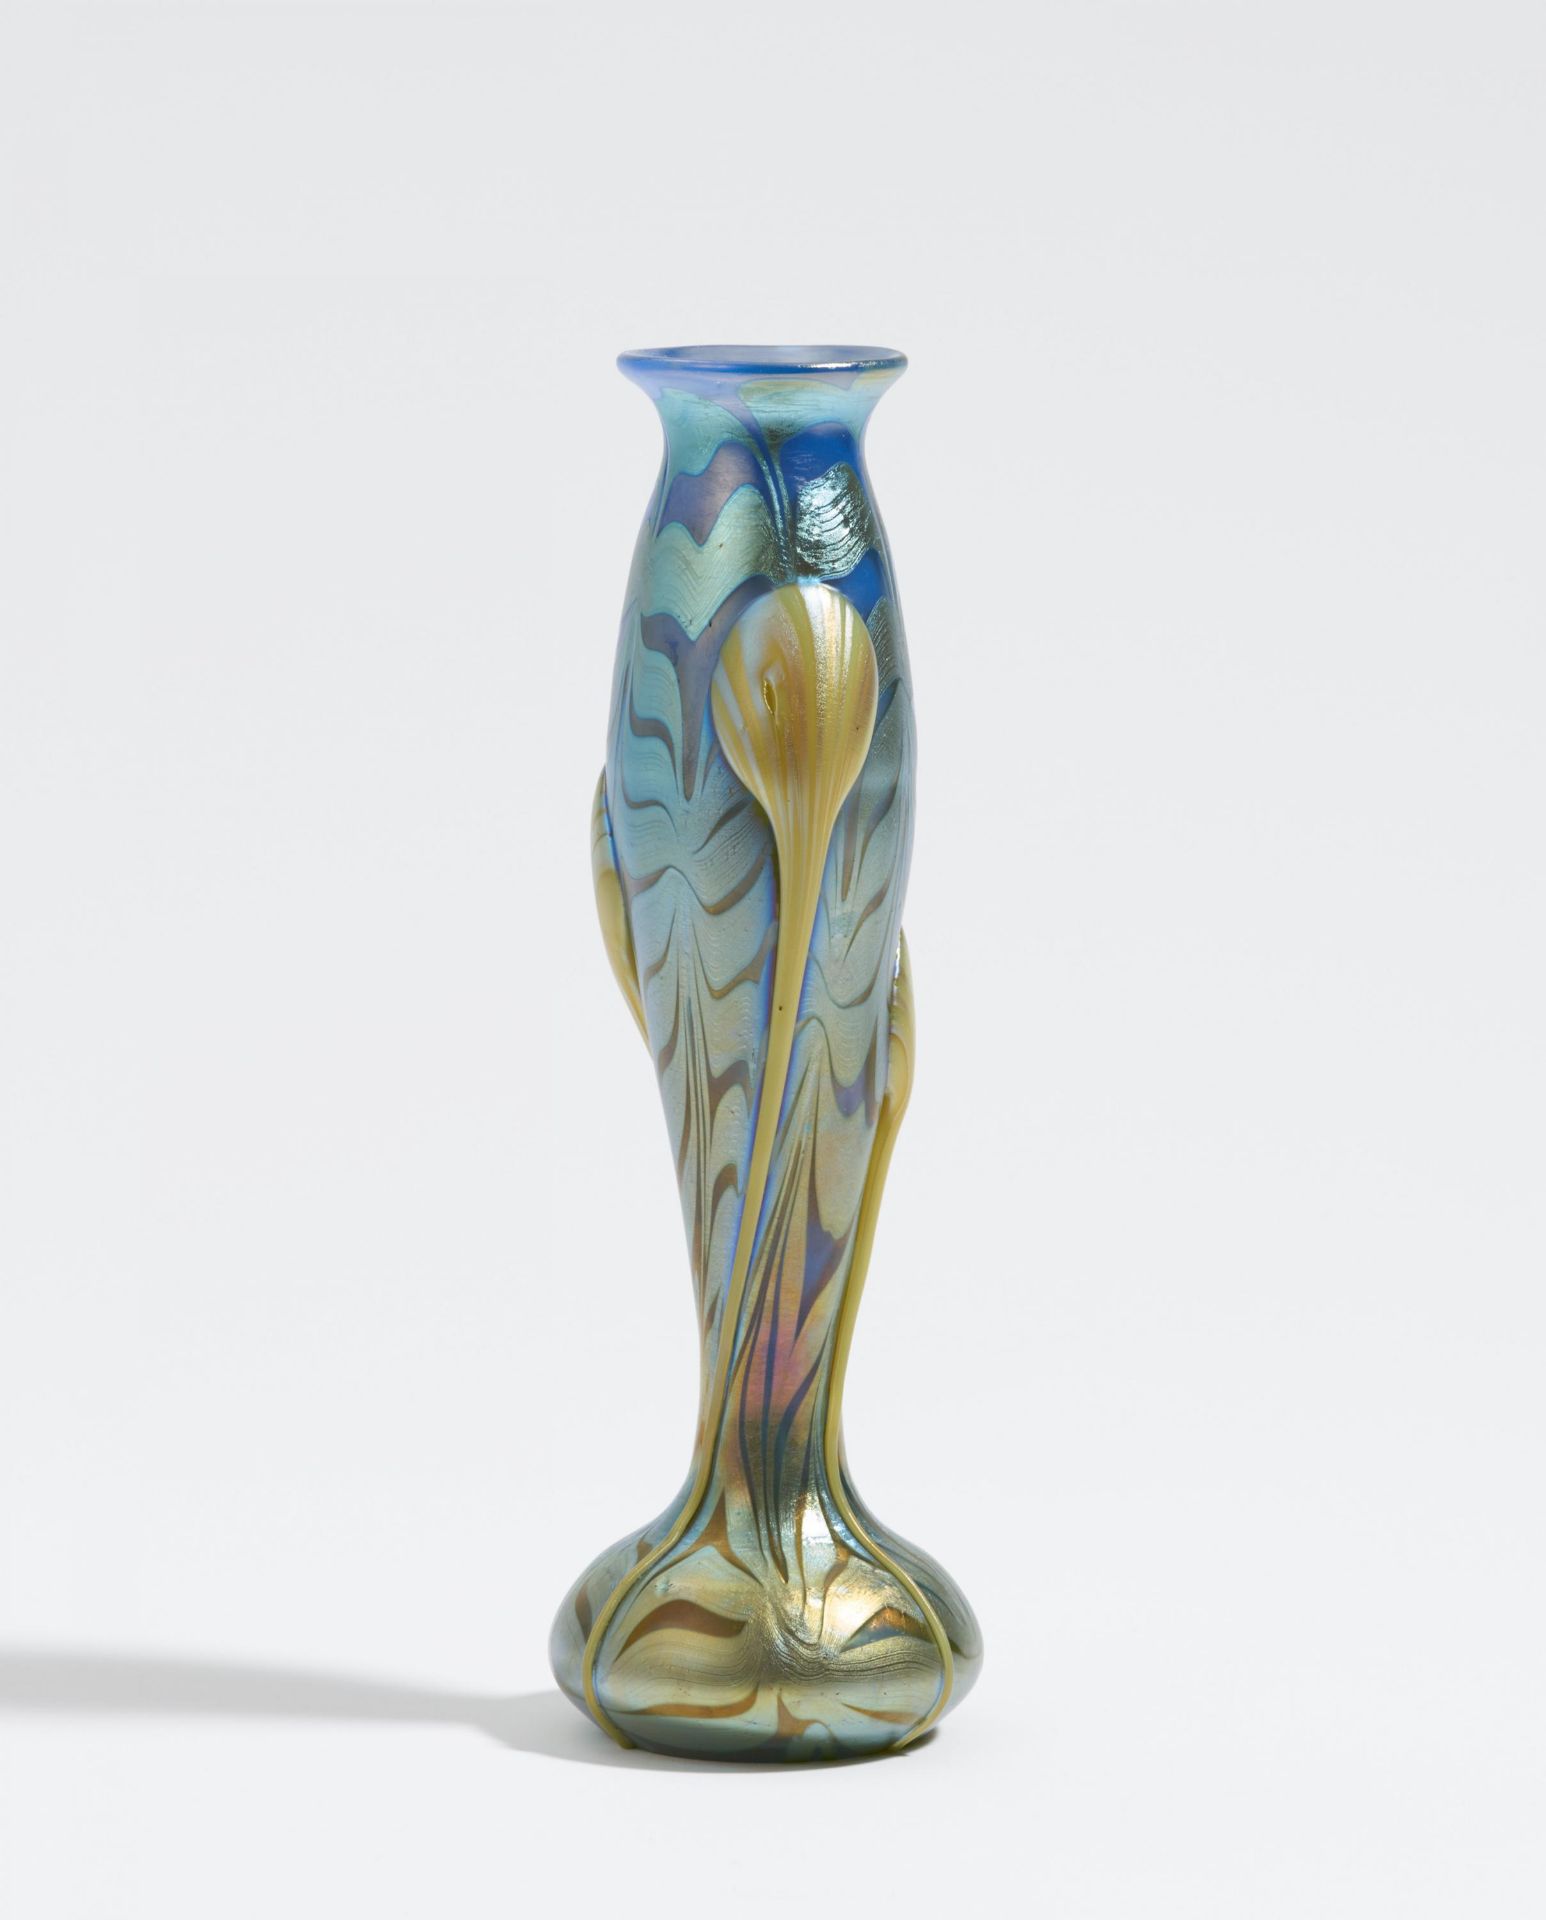 Small club-shaped vase "Phänomen" - Image 4 of 6